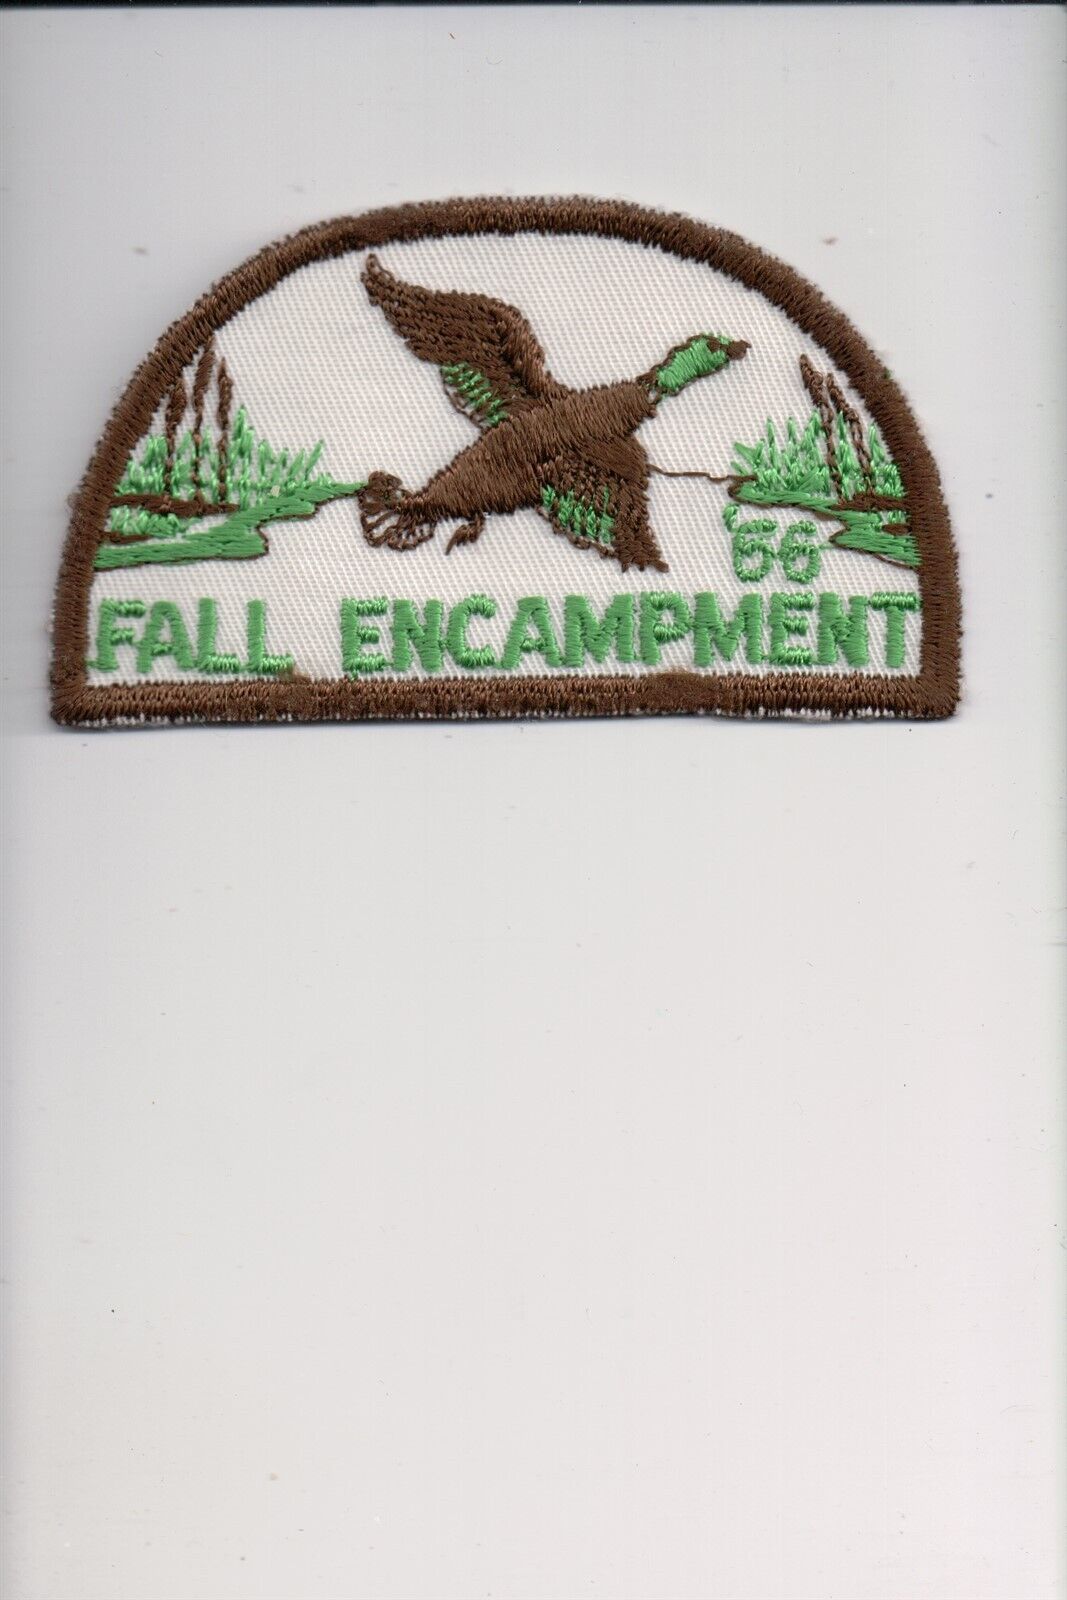 1966 Fall Encampment patch